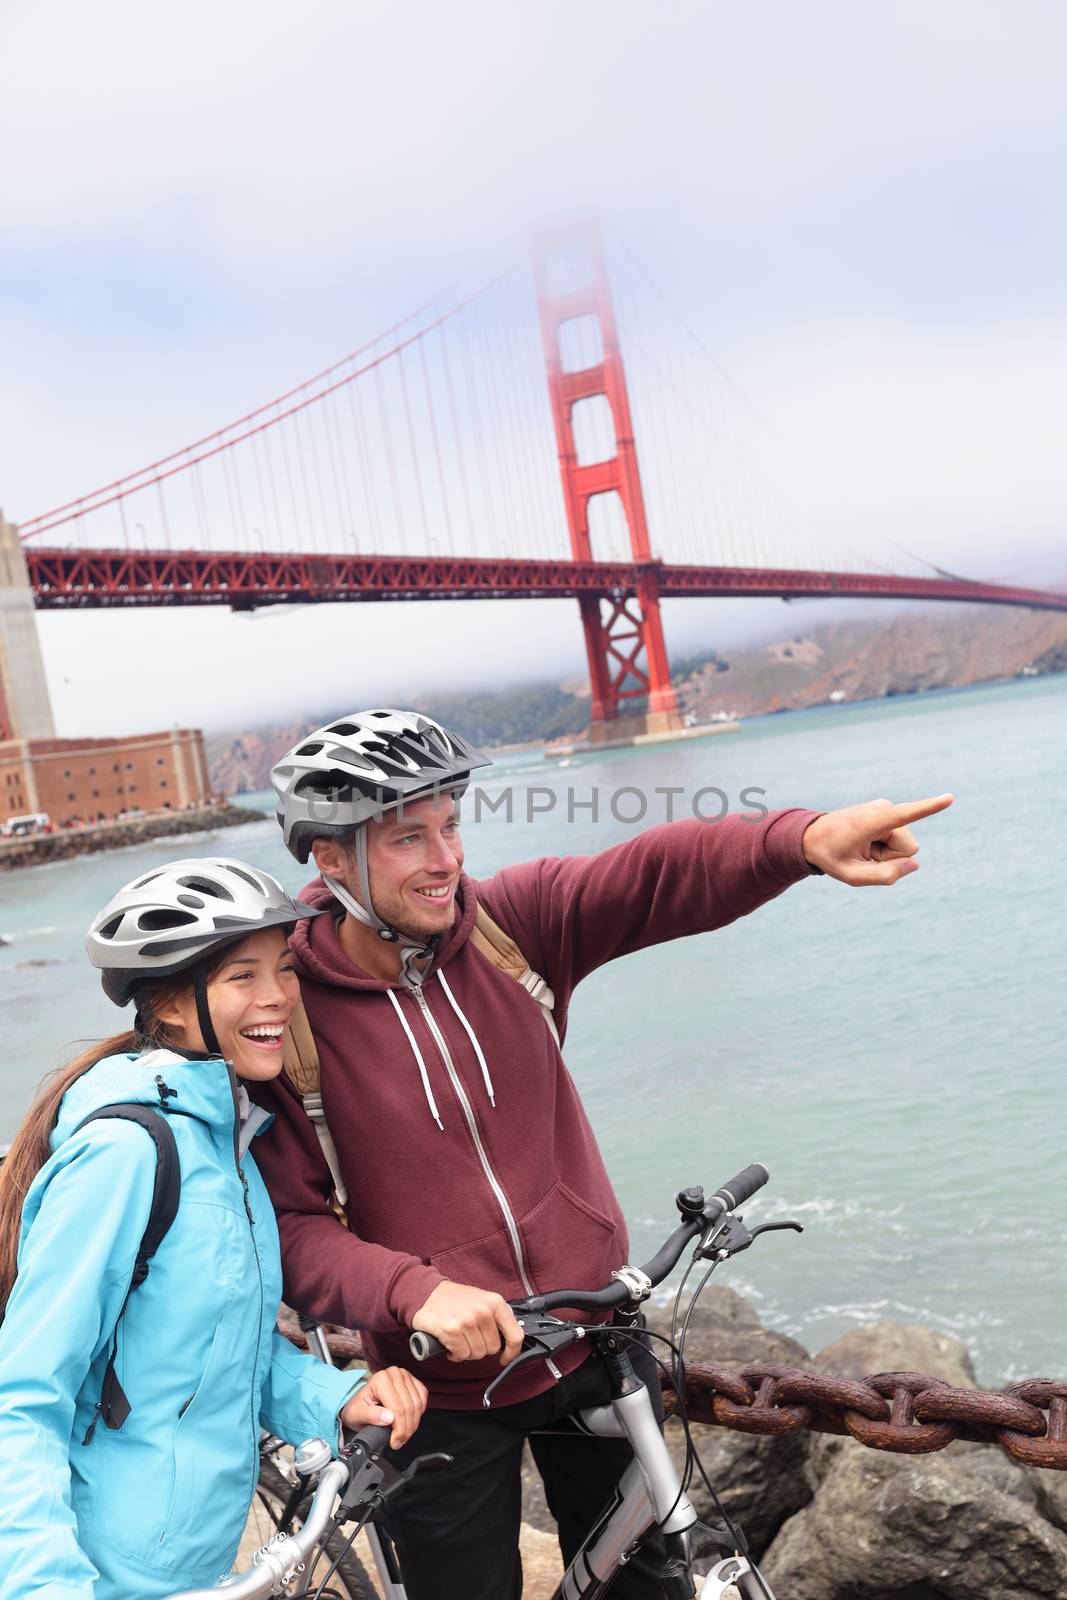 Golden gate bridge - happy biking couple portrait by Maridav